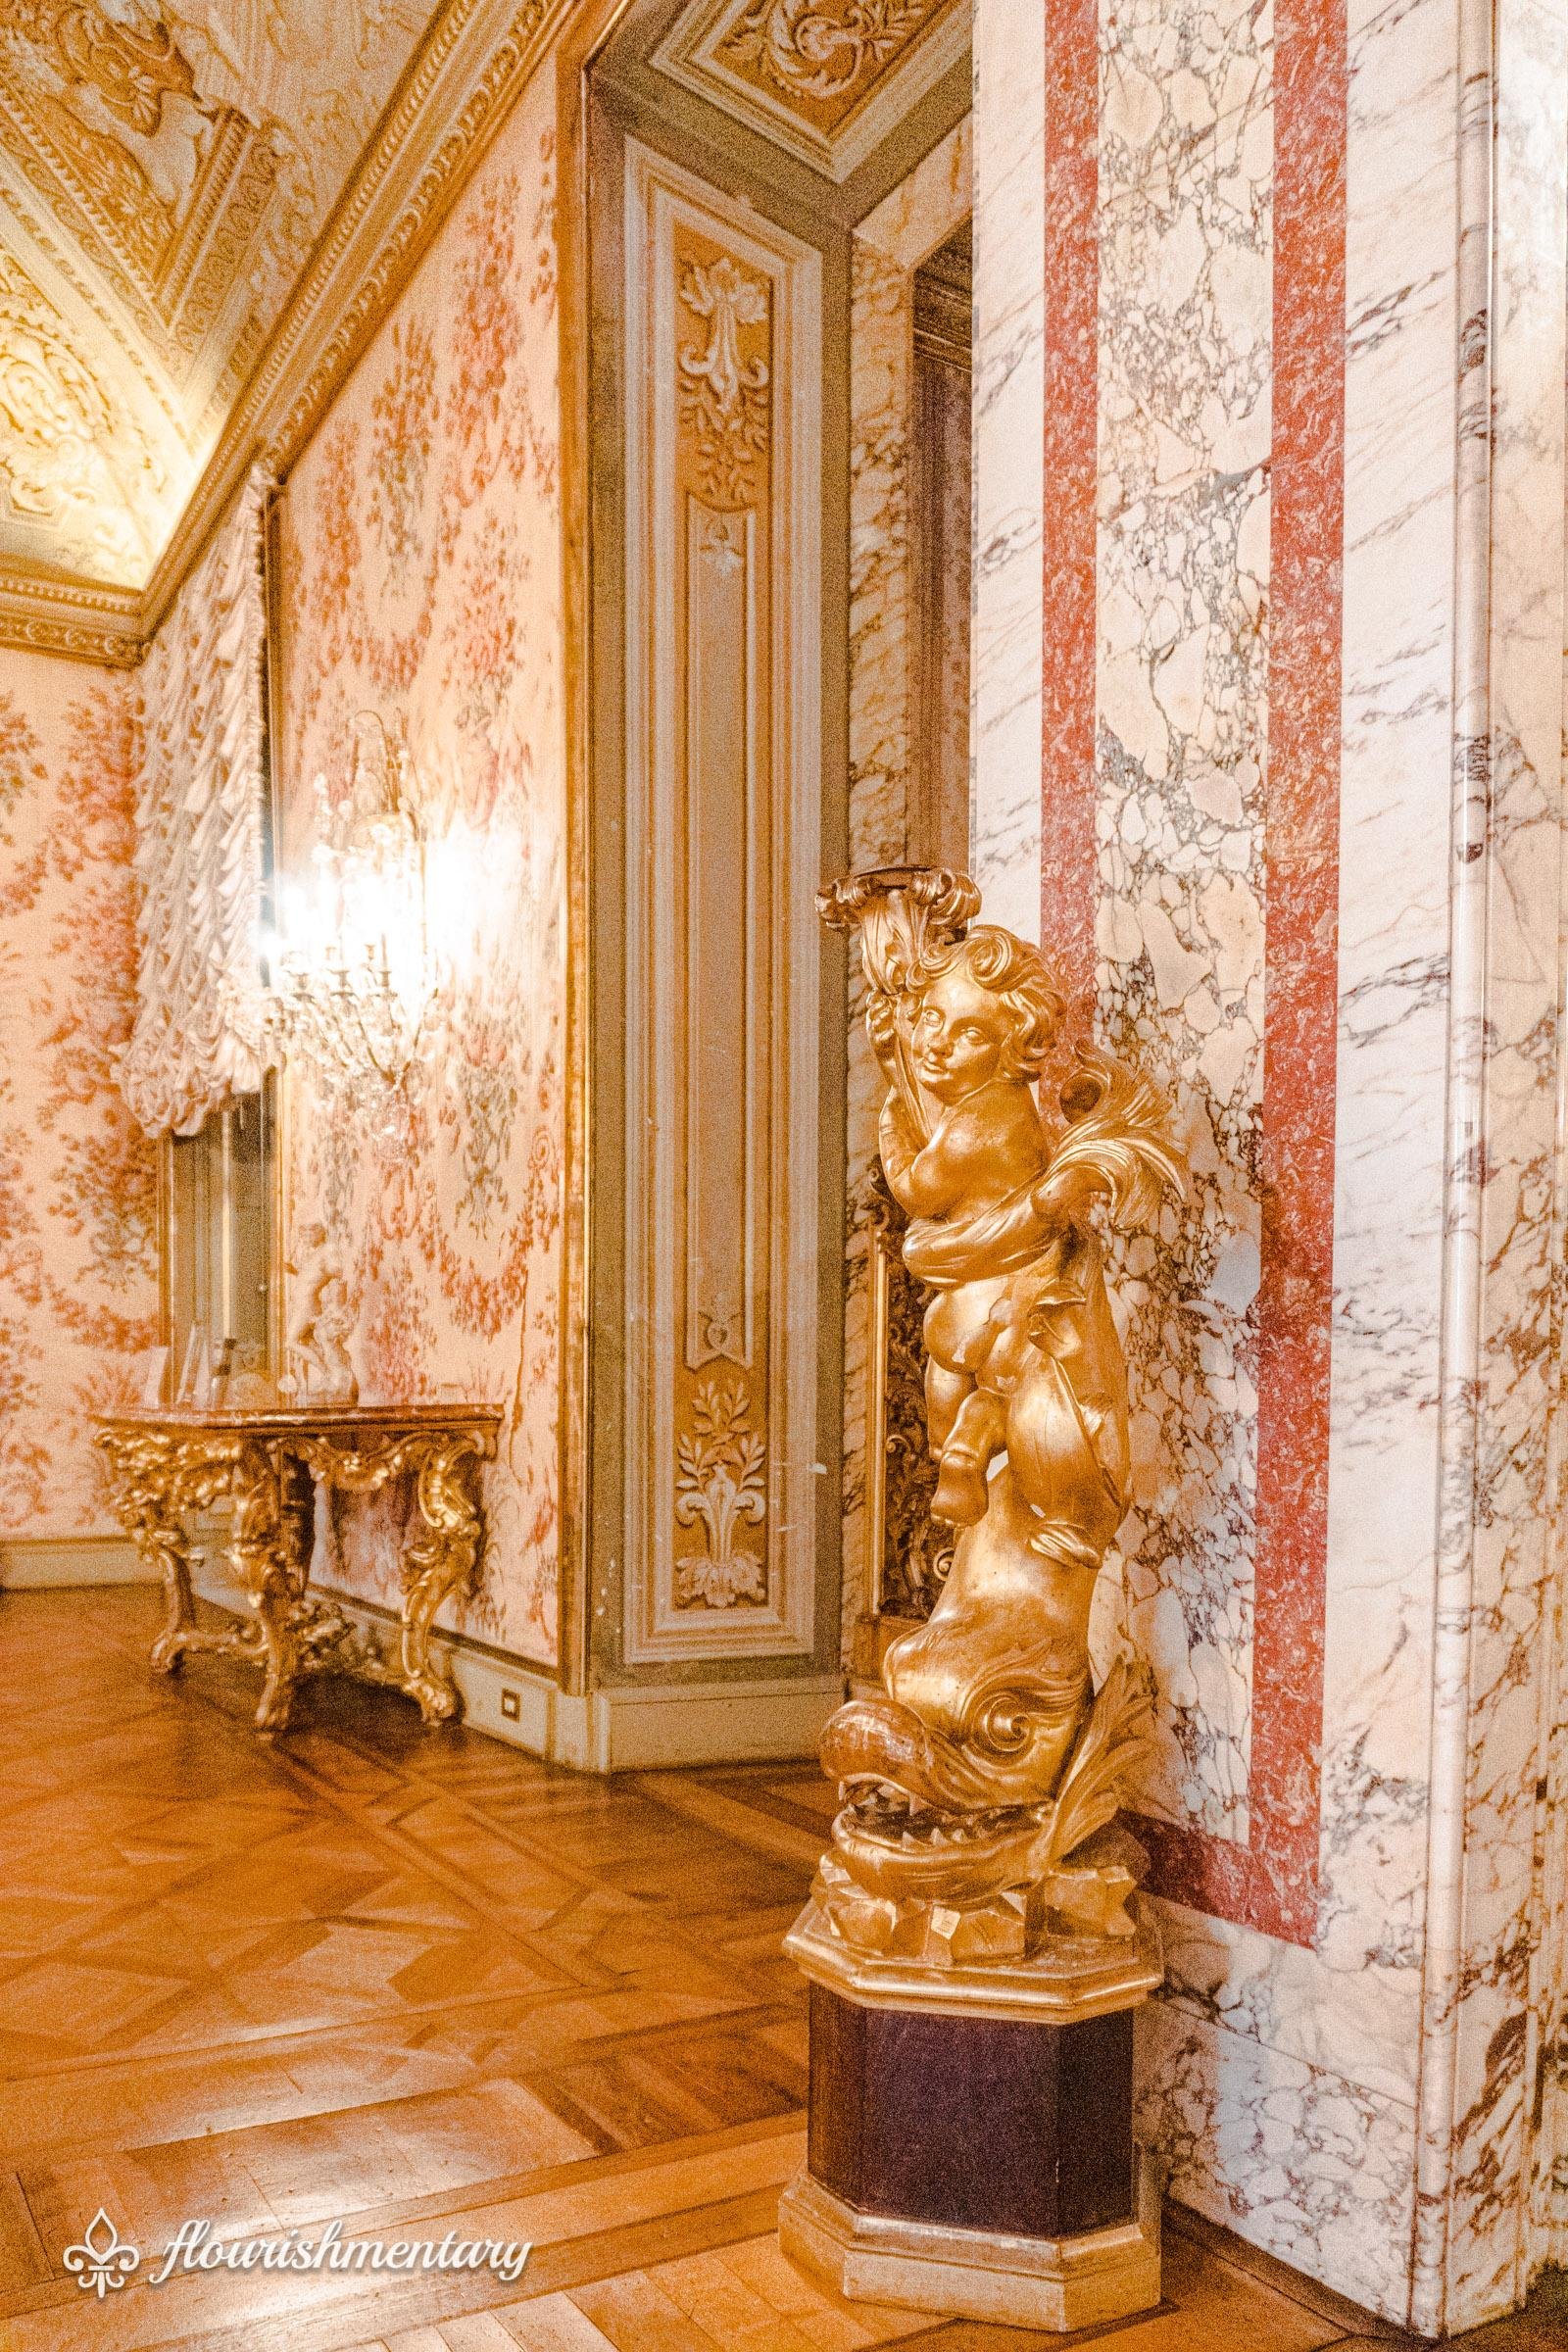 Galleria Doria Pamphilj ballroom